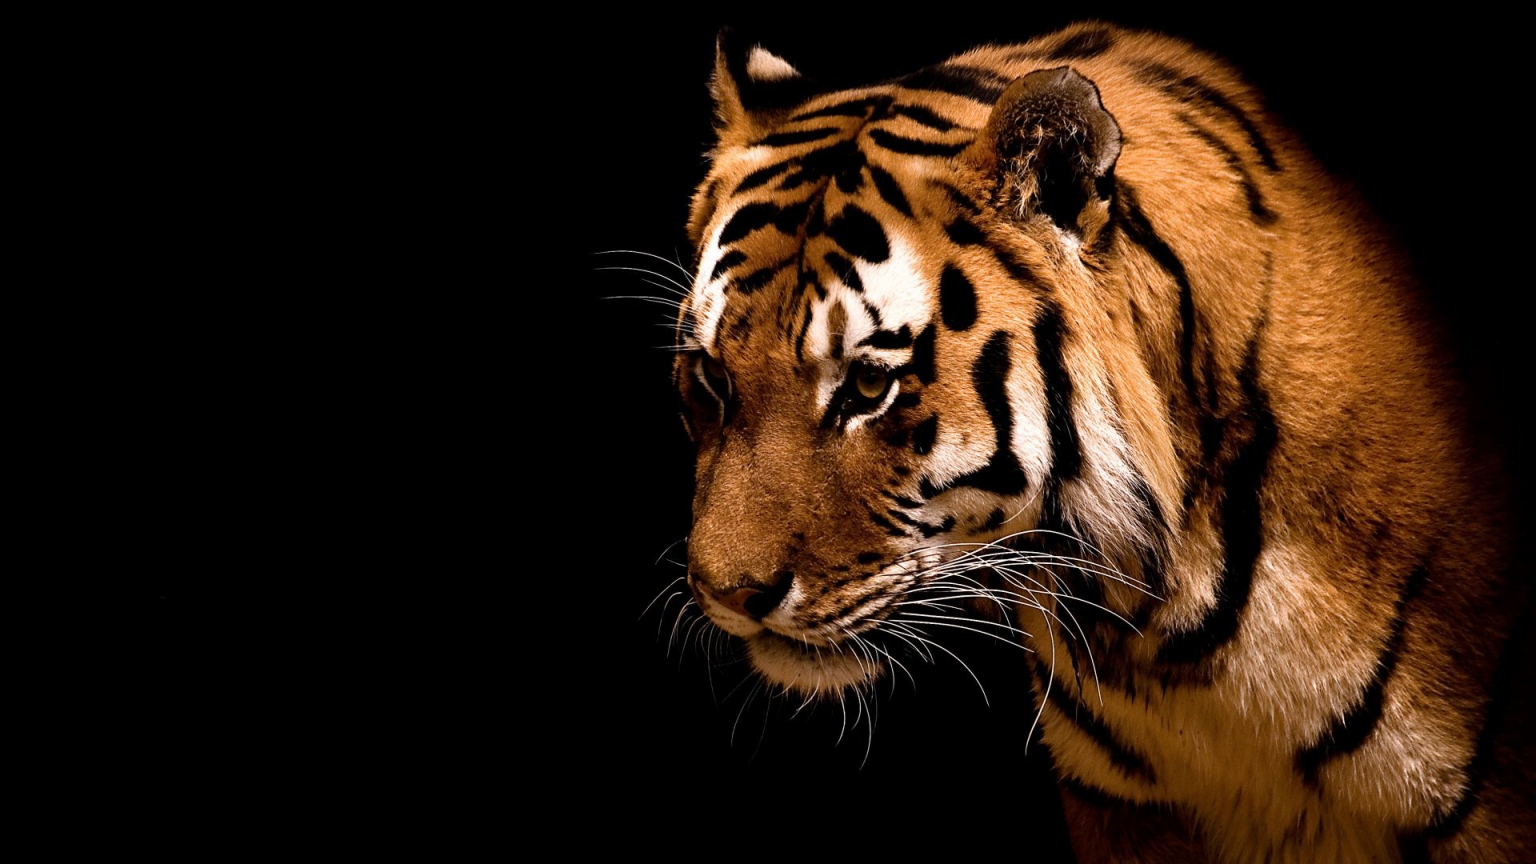 Impressive Tiger for 1536 x 864 HDTV resolution